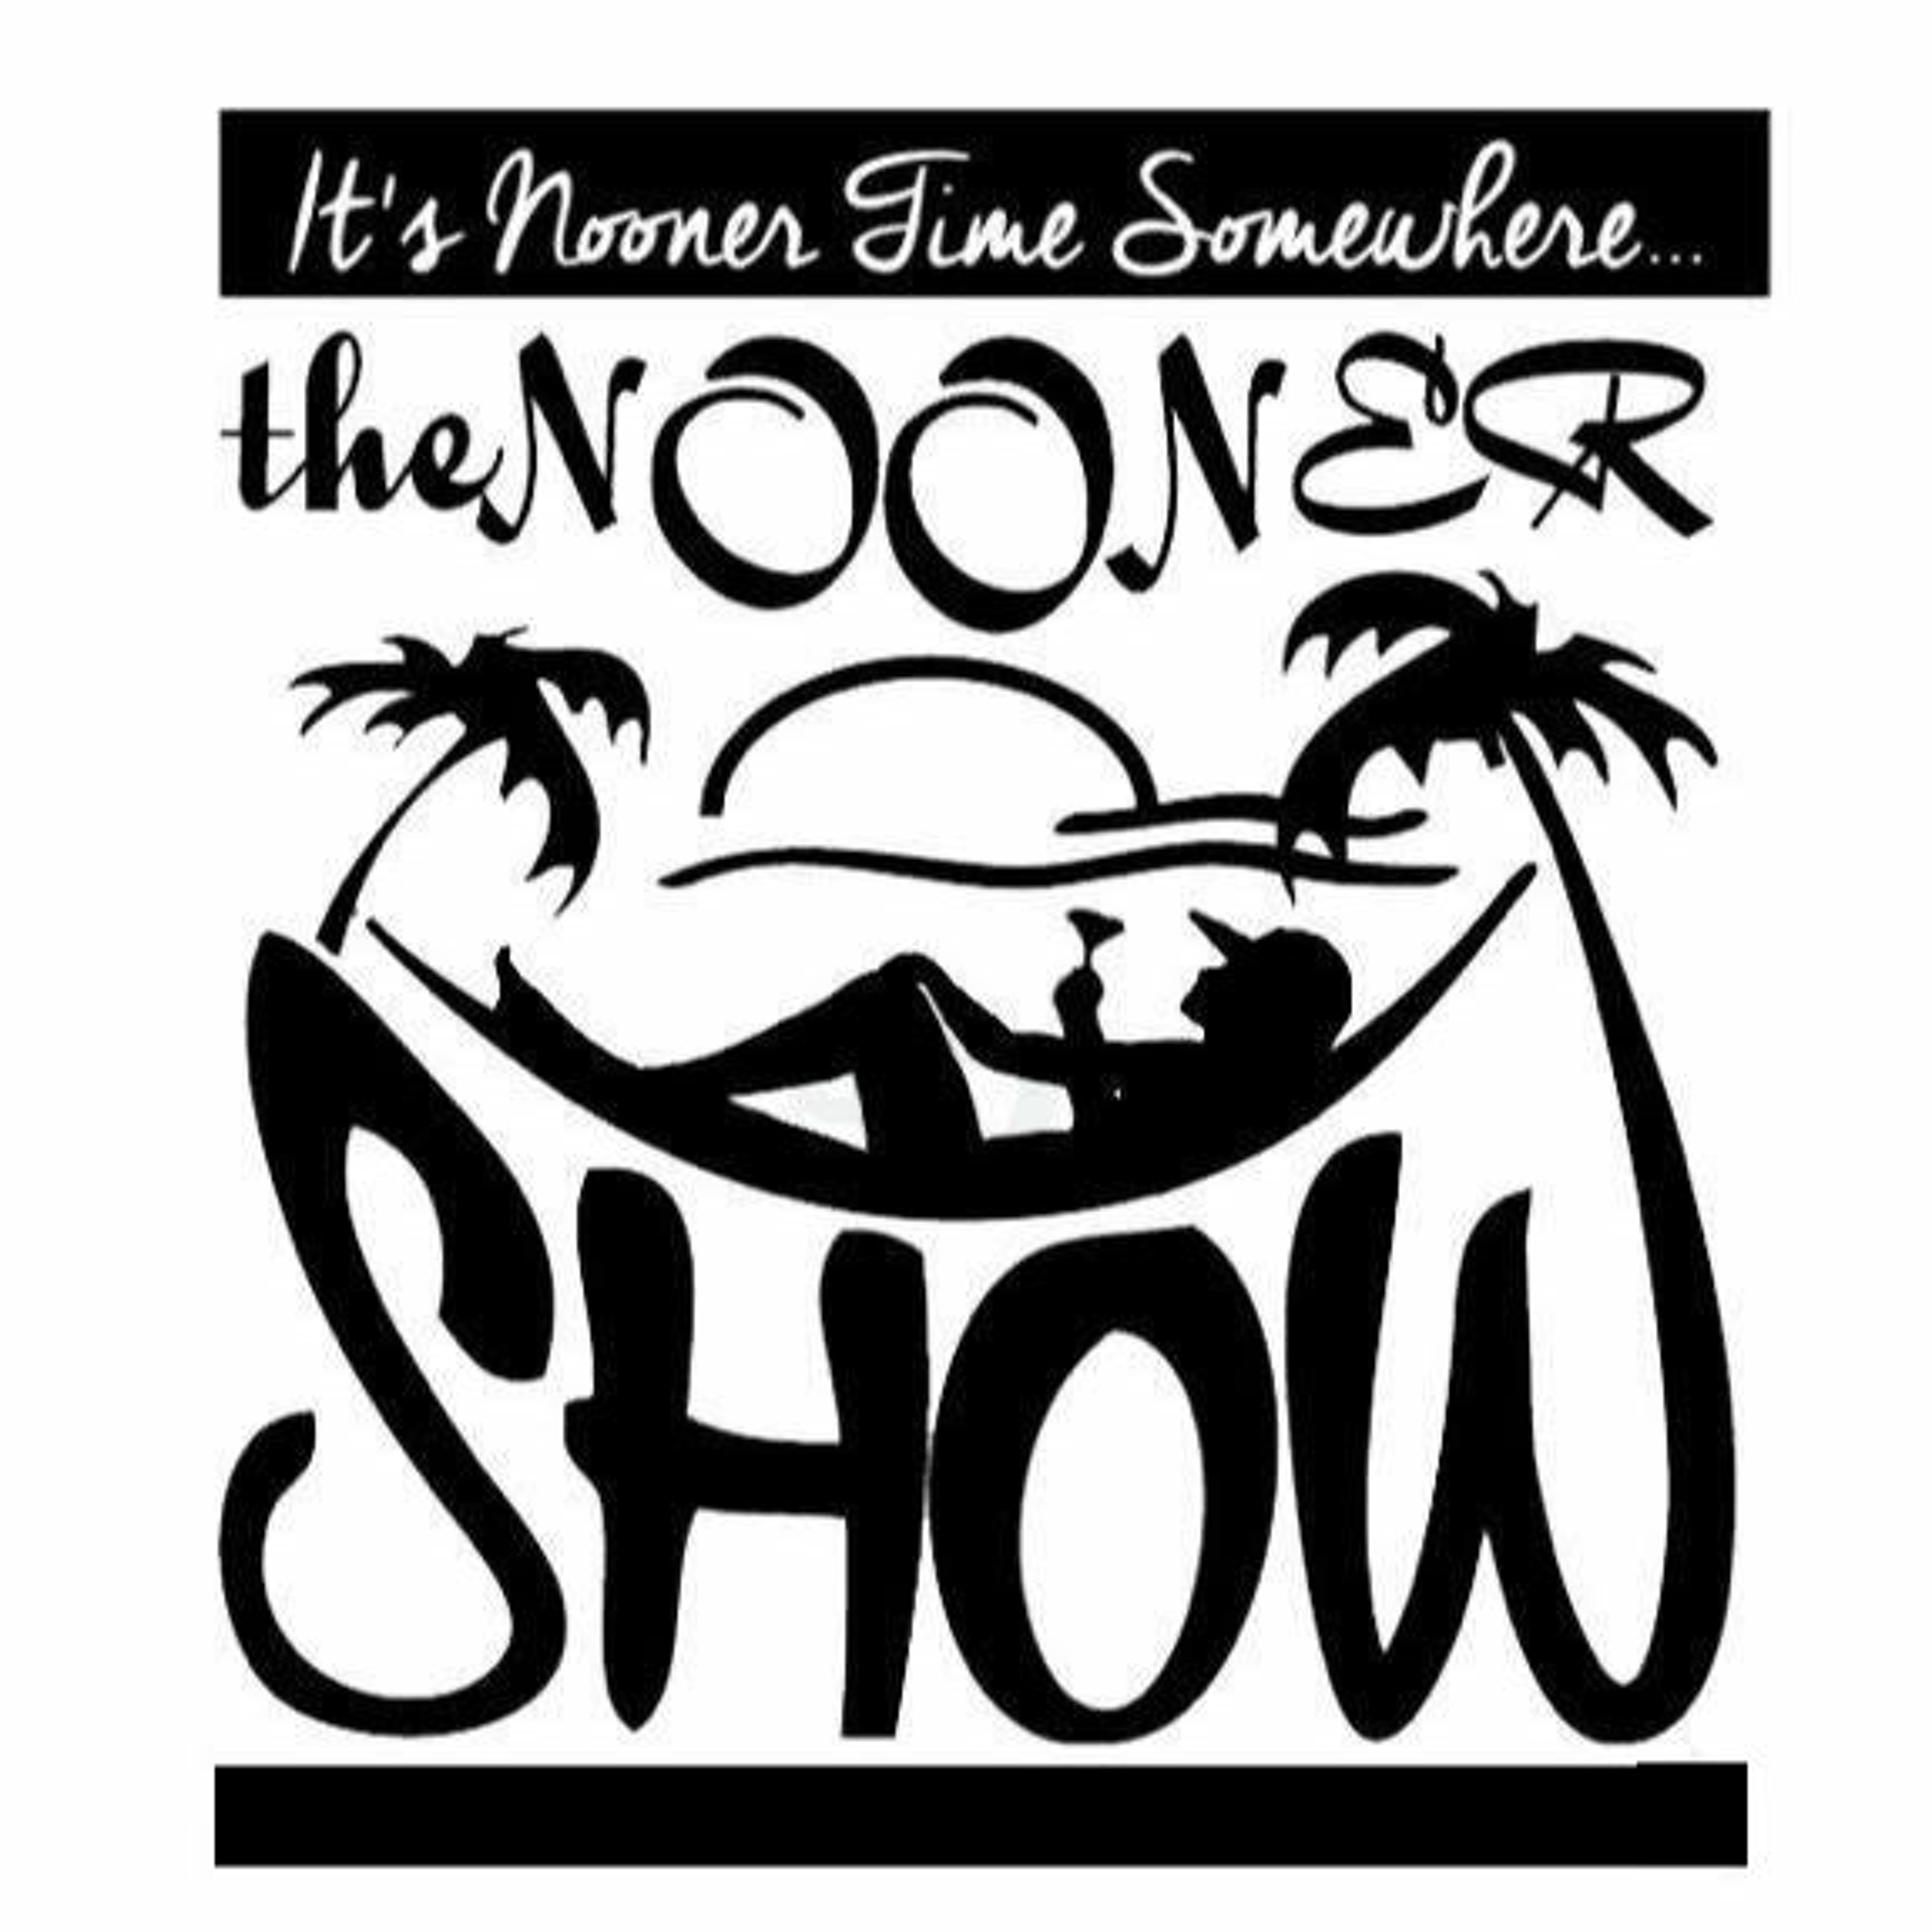 The Nooner Show - Episode 210